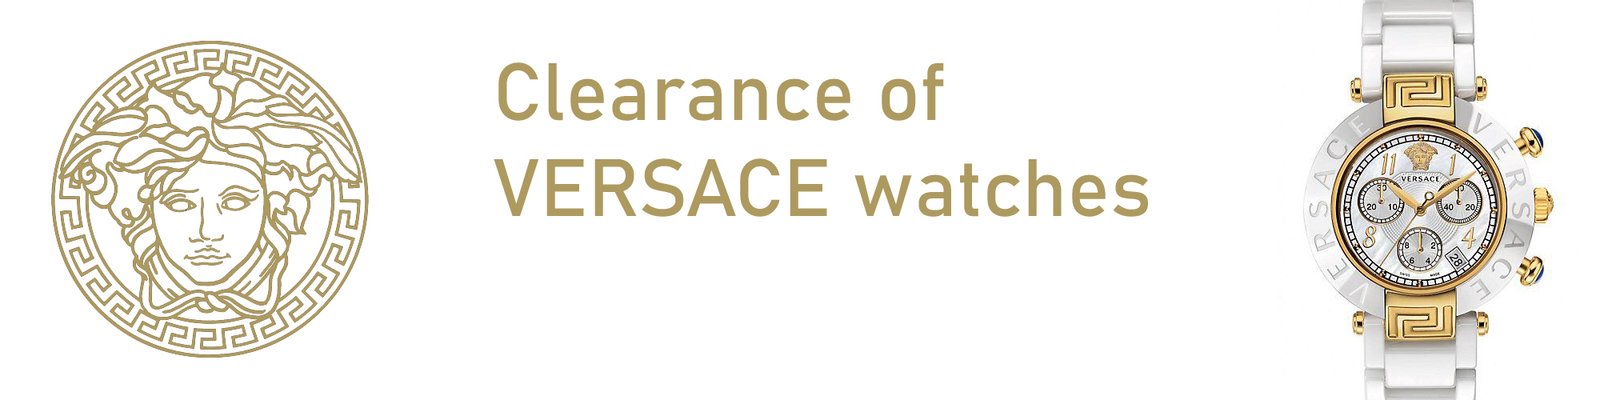 Versace_Watches